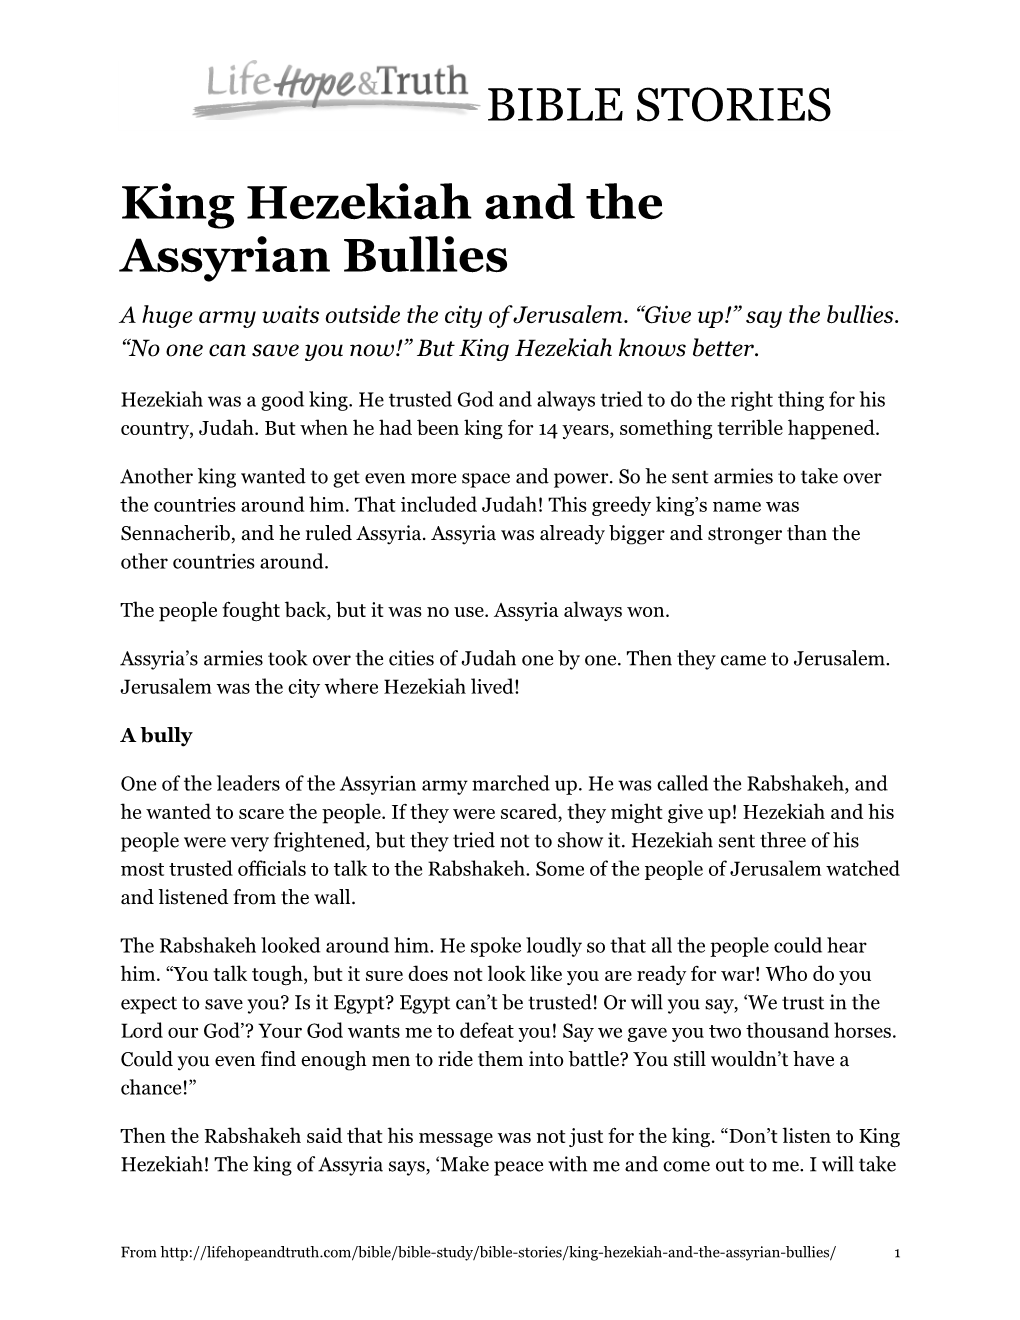 BIBLE STORIES King Hezekiah and the Assyrian Bullies